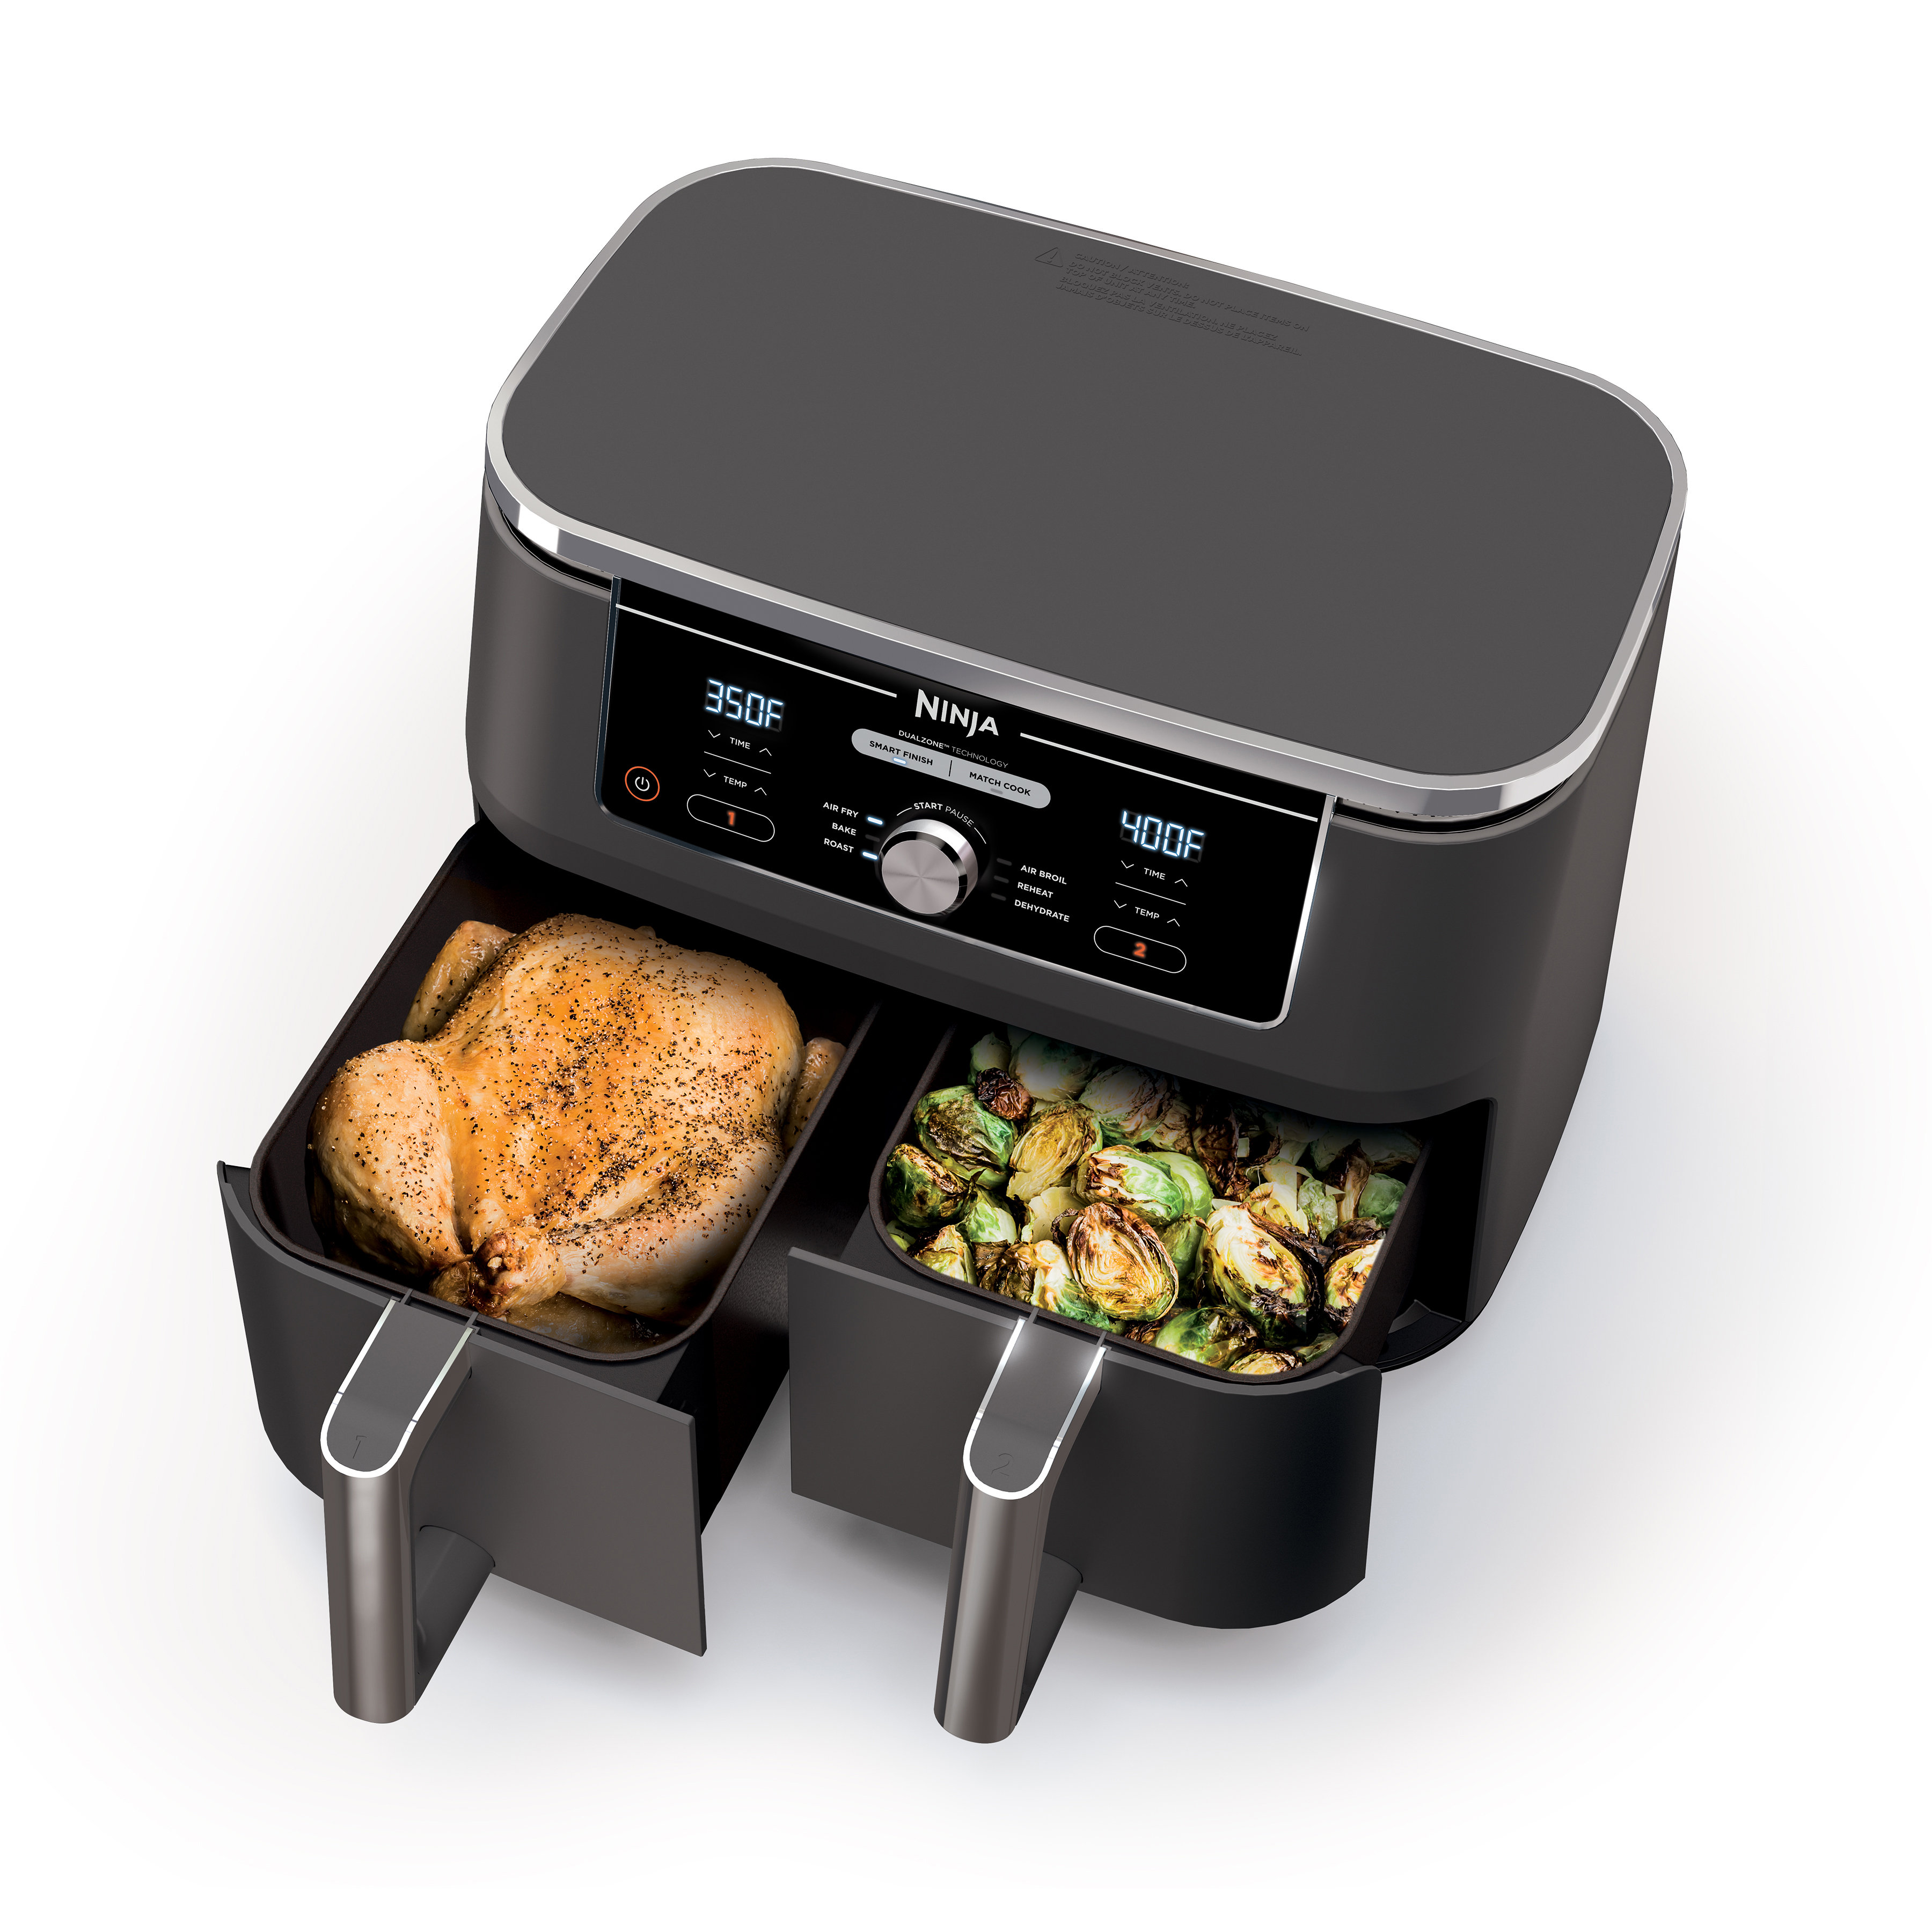 Ninja's originally $300 Foodi Smart XL 6-in-1 air fry grill now